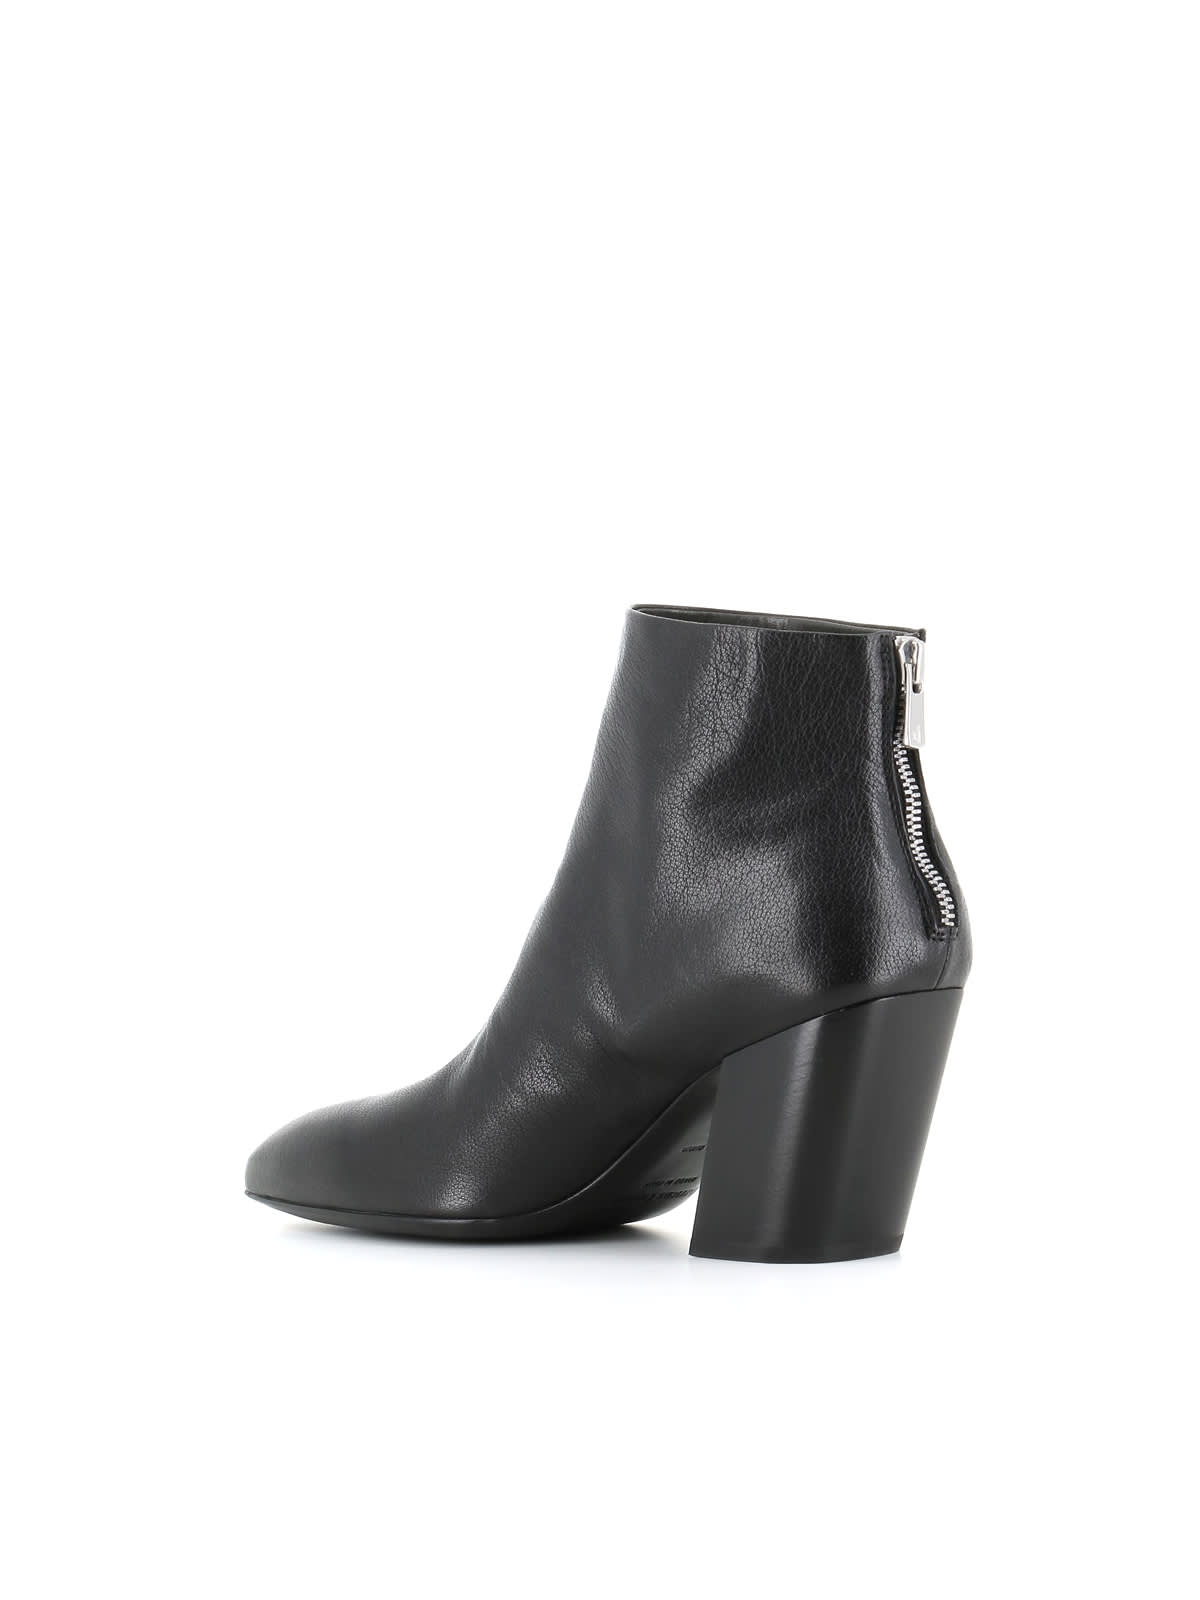 Shop Officine Creative Ankle Boot Serve/003 In Black